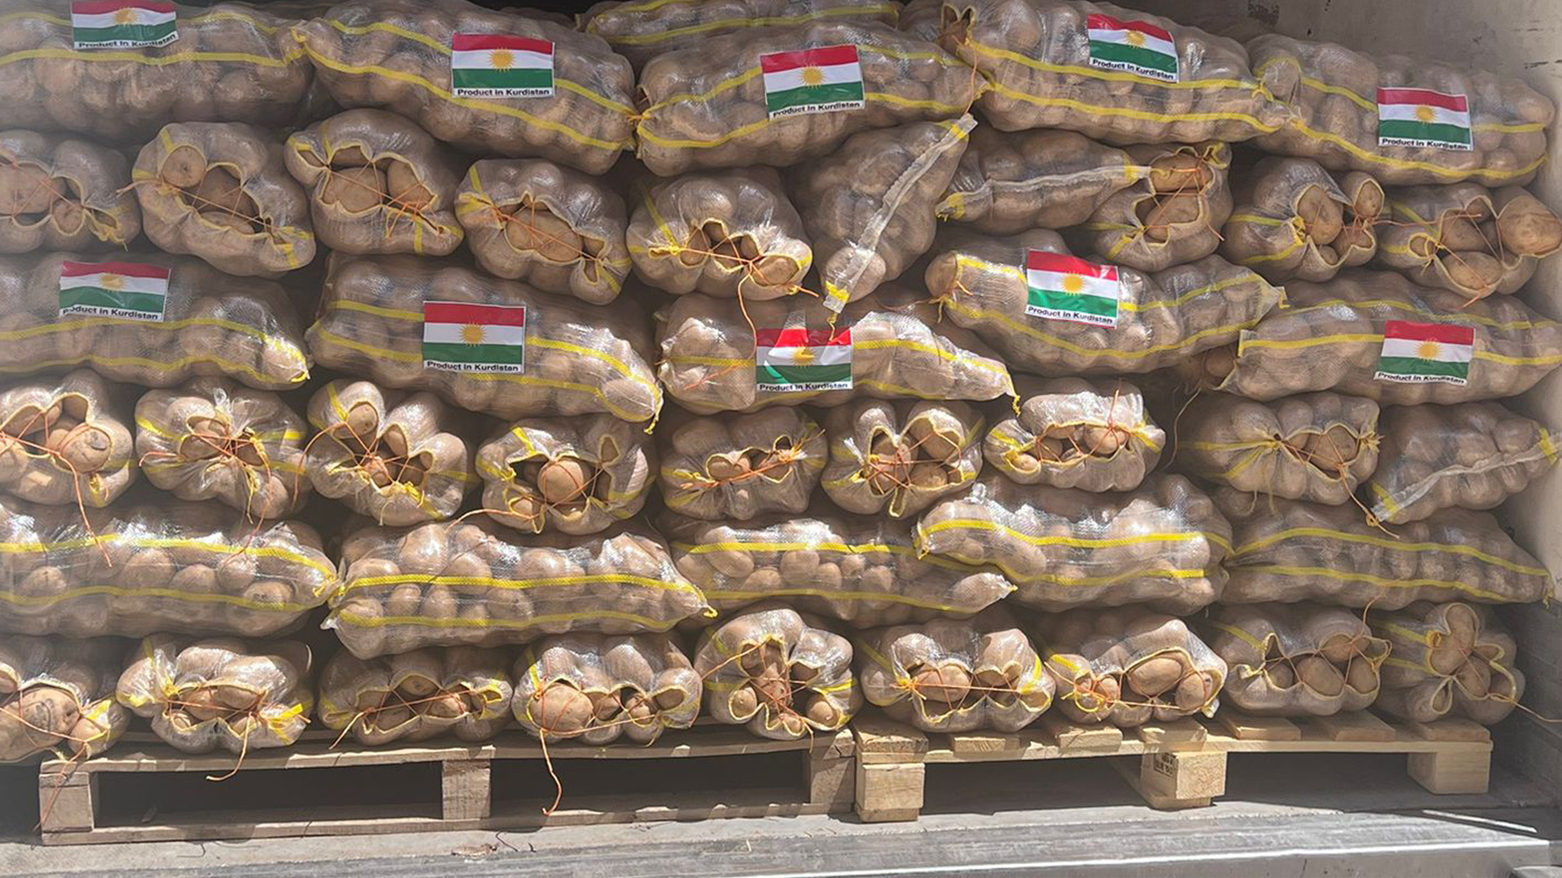 Kurdistan Region potatoes are loaded in a truck bound to the UAE. (Photo: Renas A. Saeed/Kurdistan 24)